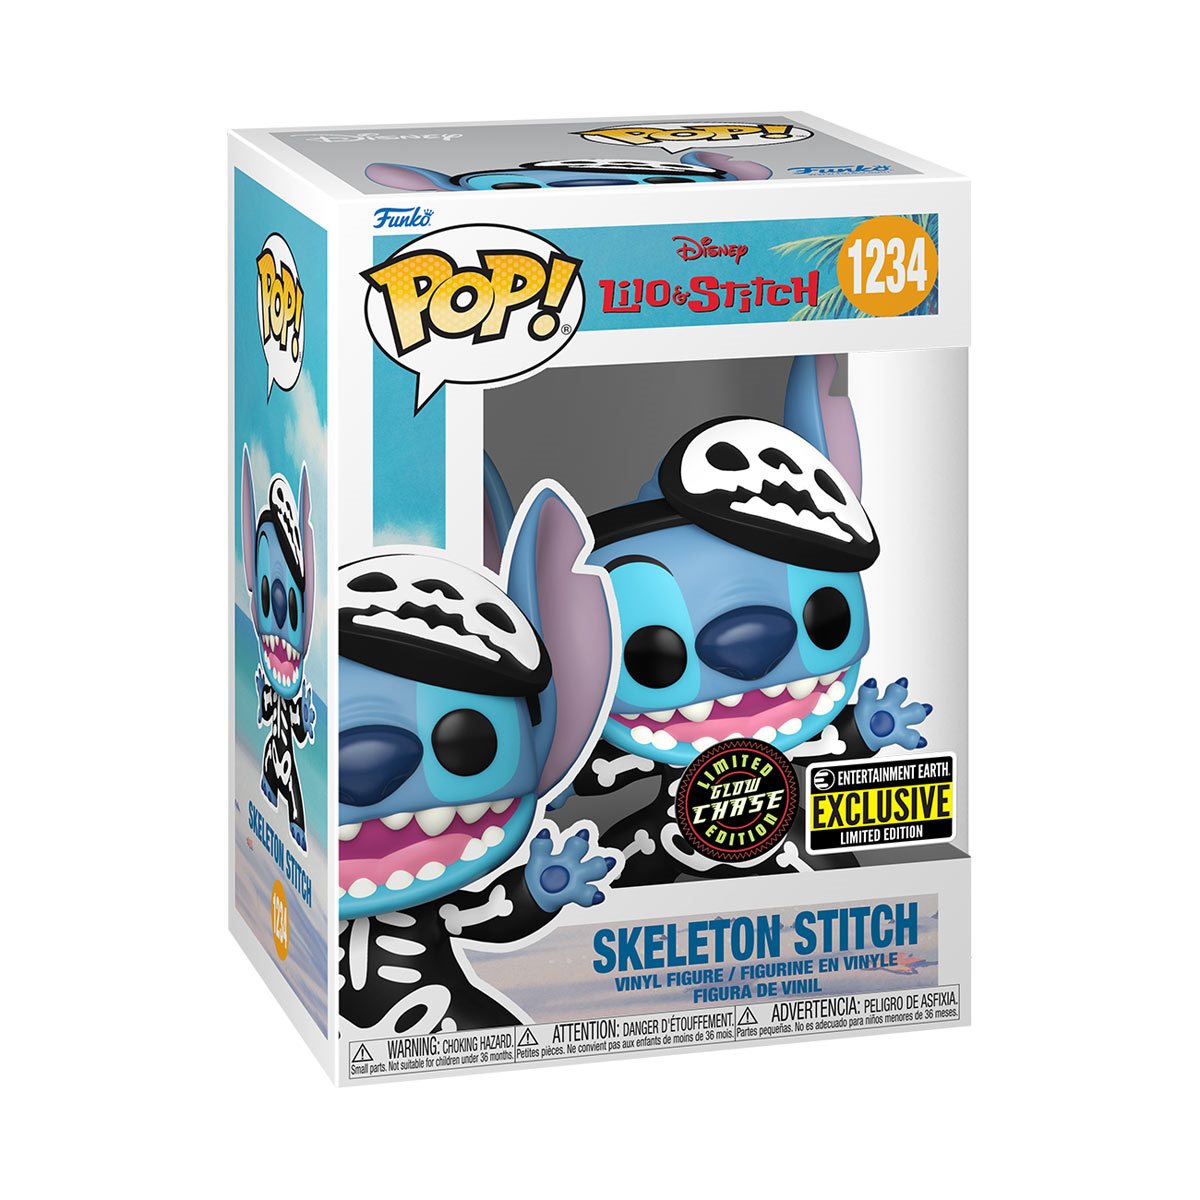 Funko POP! Disney Lilo & Stitch Skeleton Stitch Vinyl Figure - Entertainment Earth Exclusive Chase